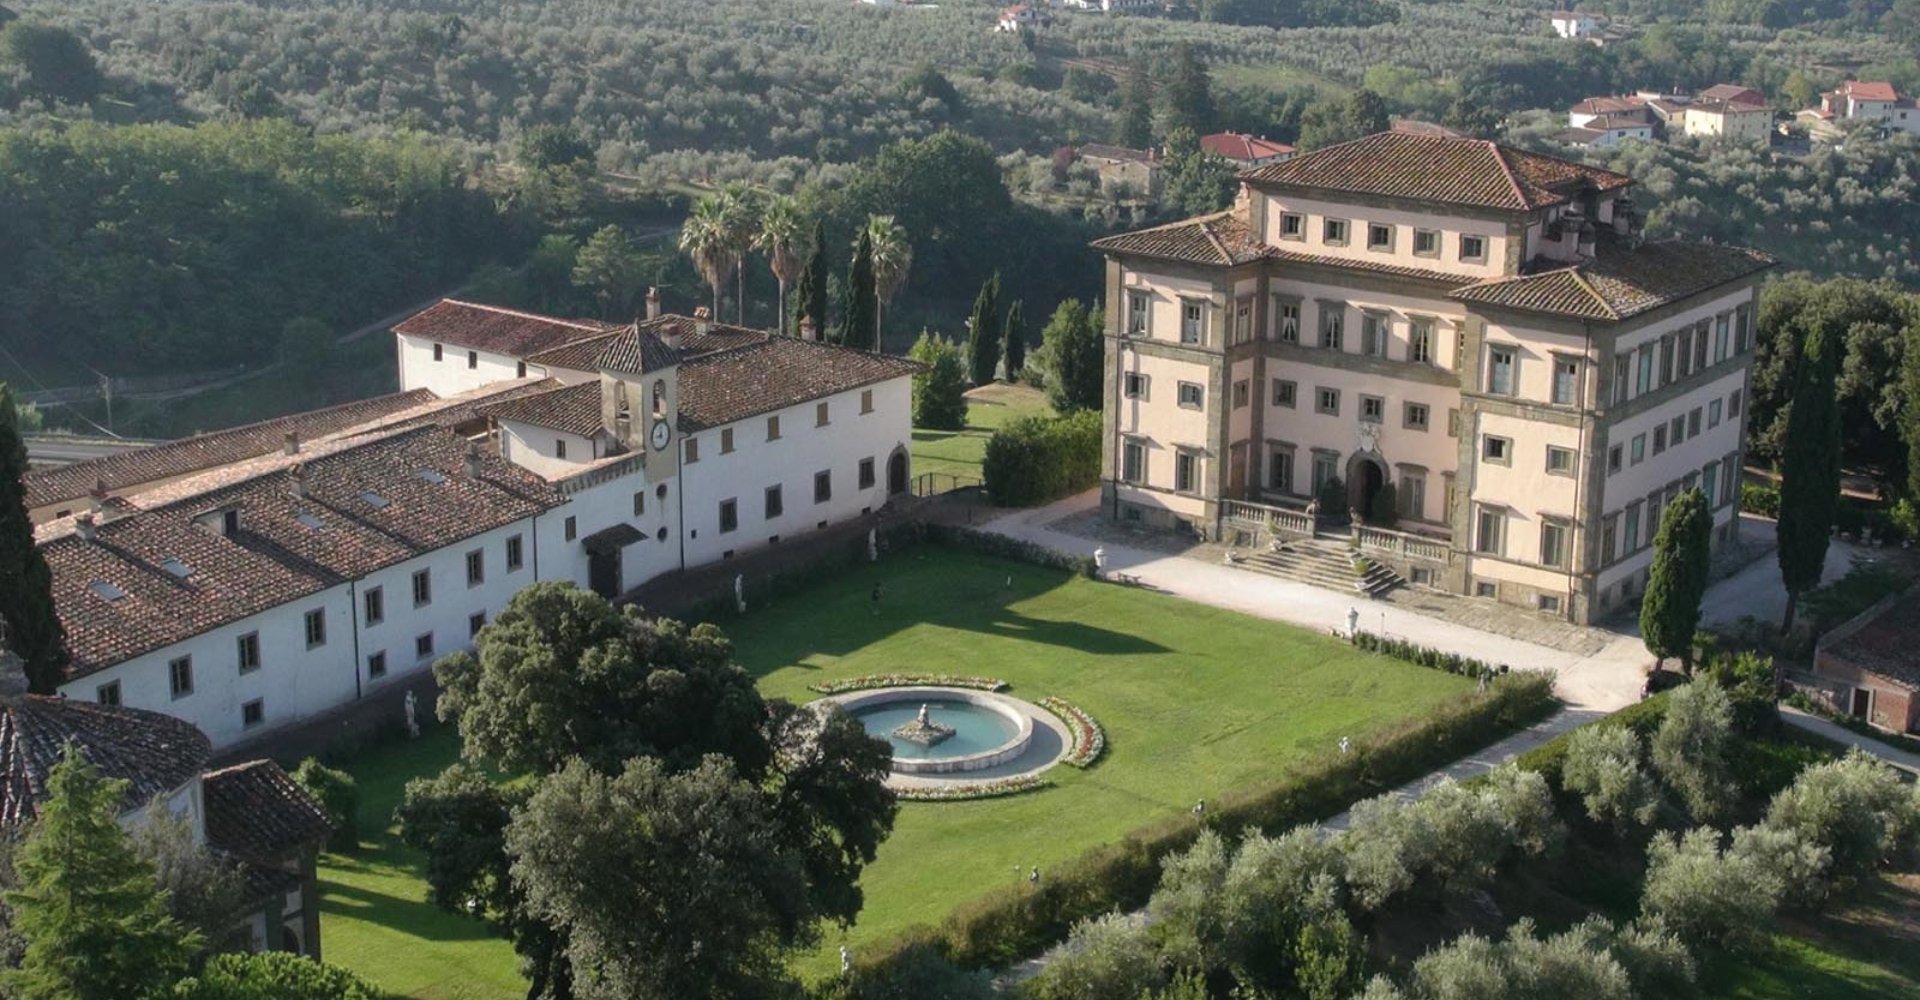 Villa Rospigliosi - Lamporecchio